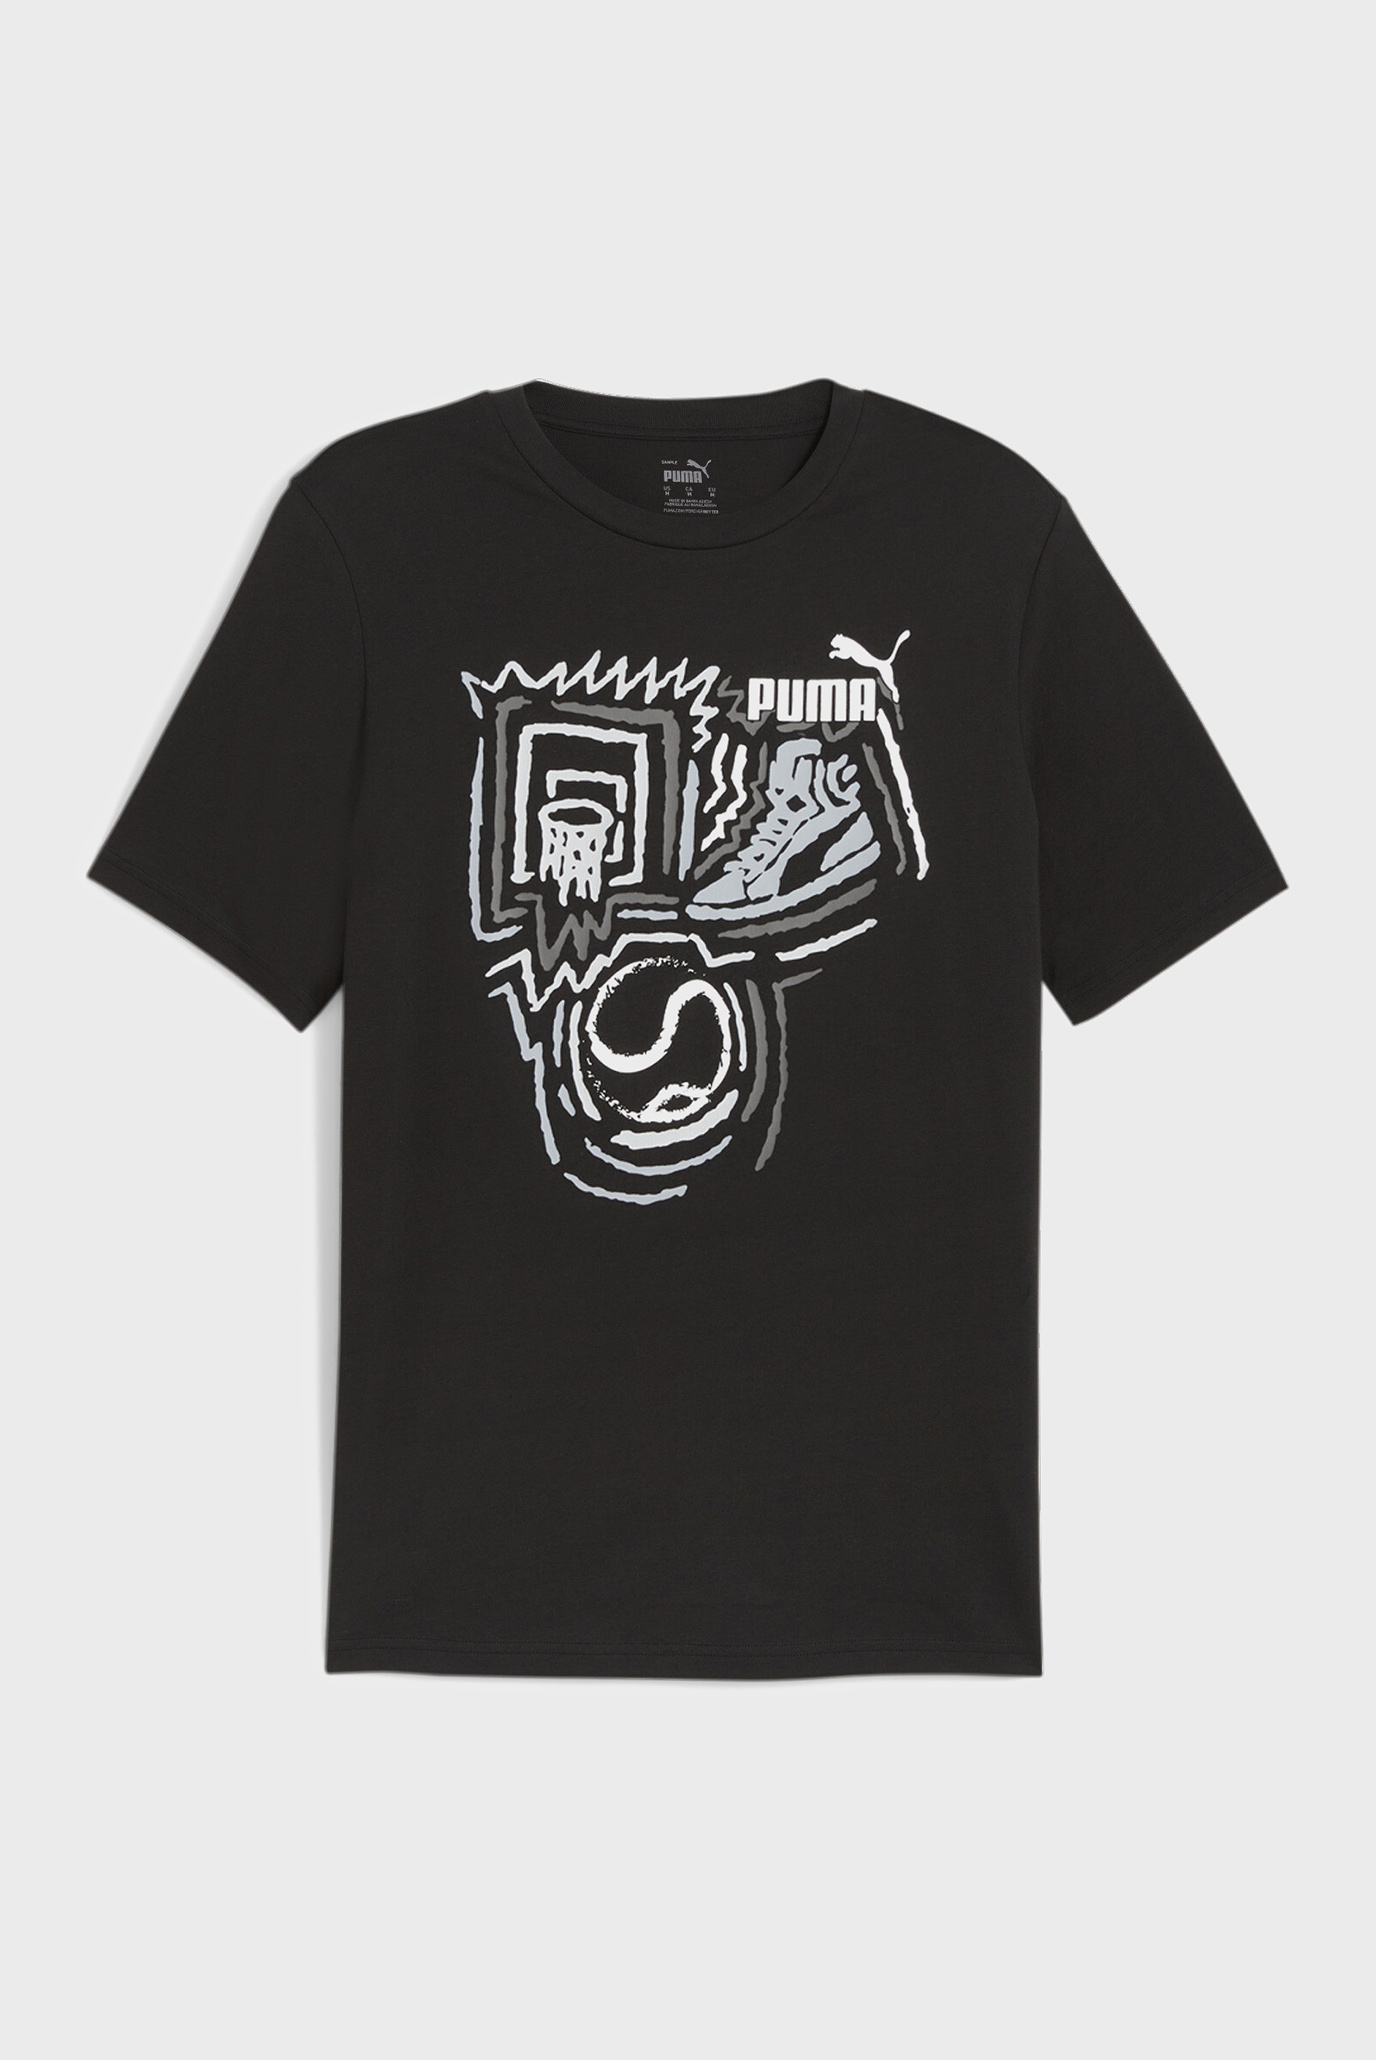 Чоловіча чорна футболка з графічним малюнком GRAPHICS Year of Sports Men's Tee 1